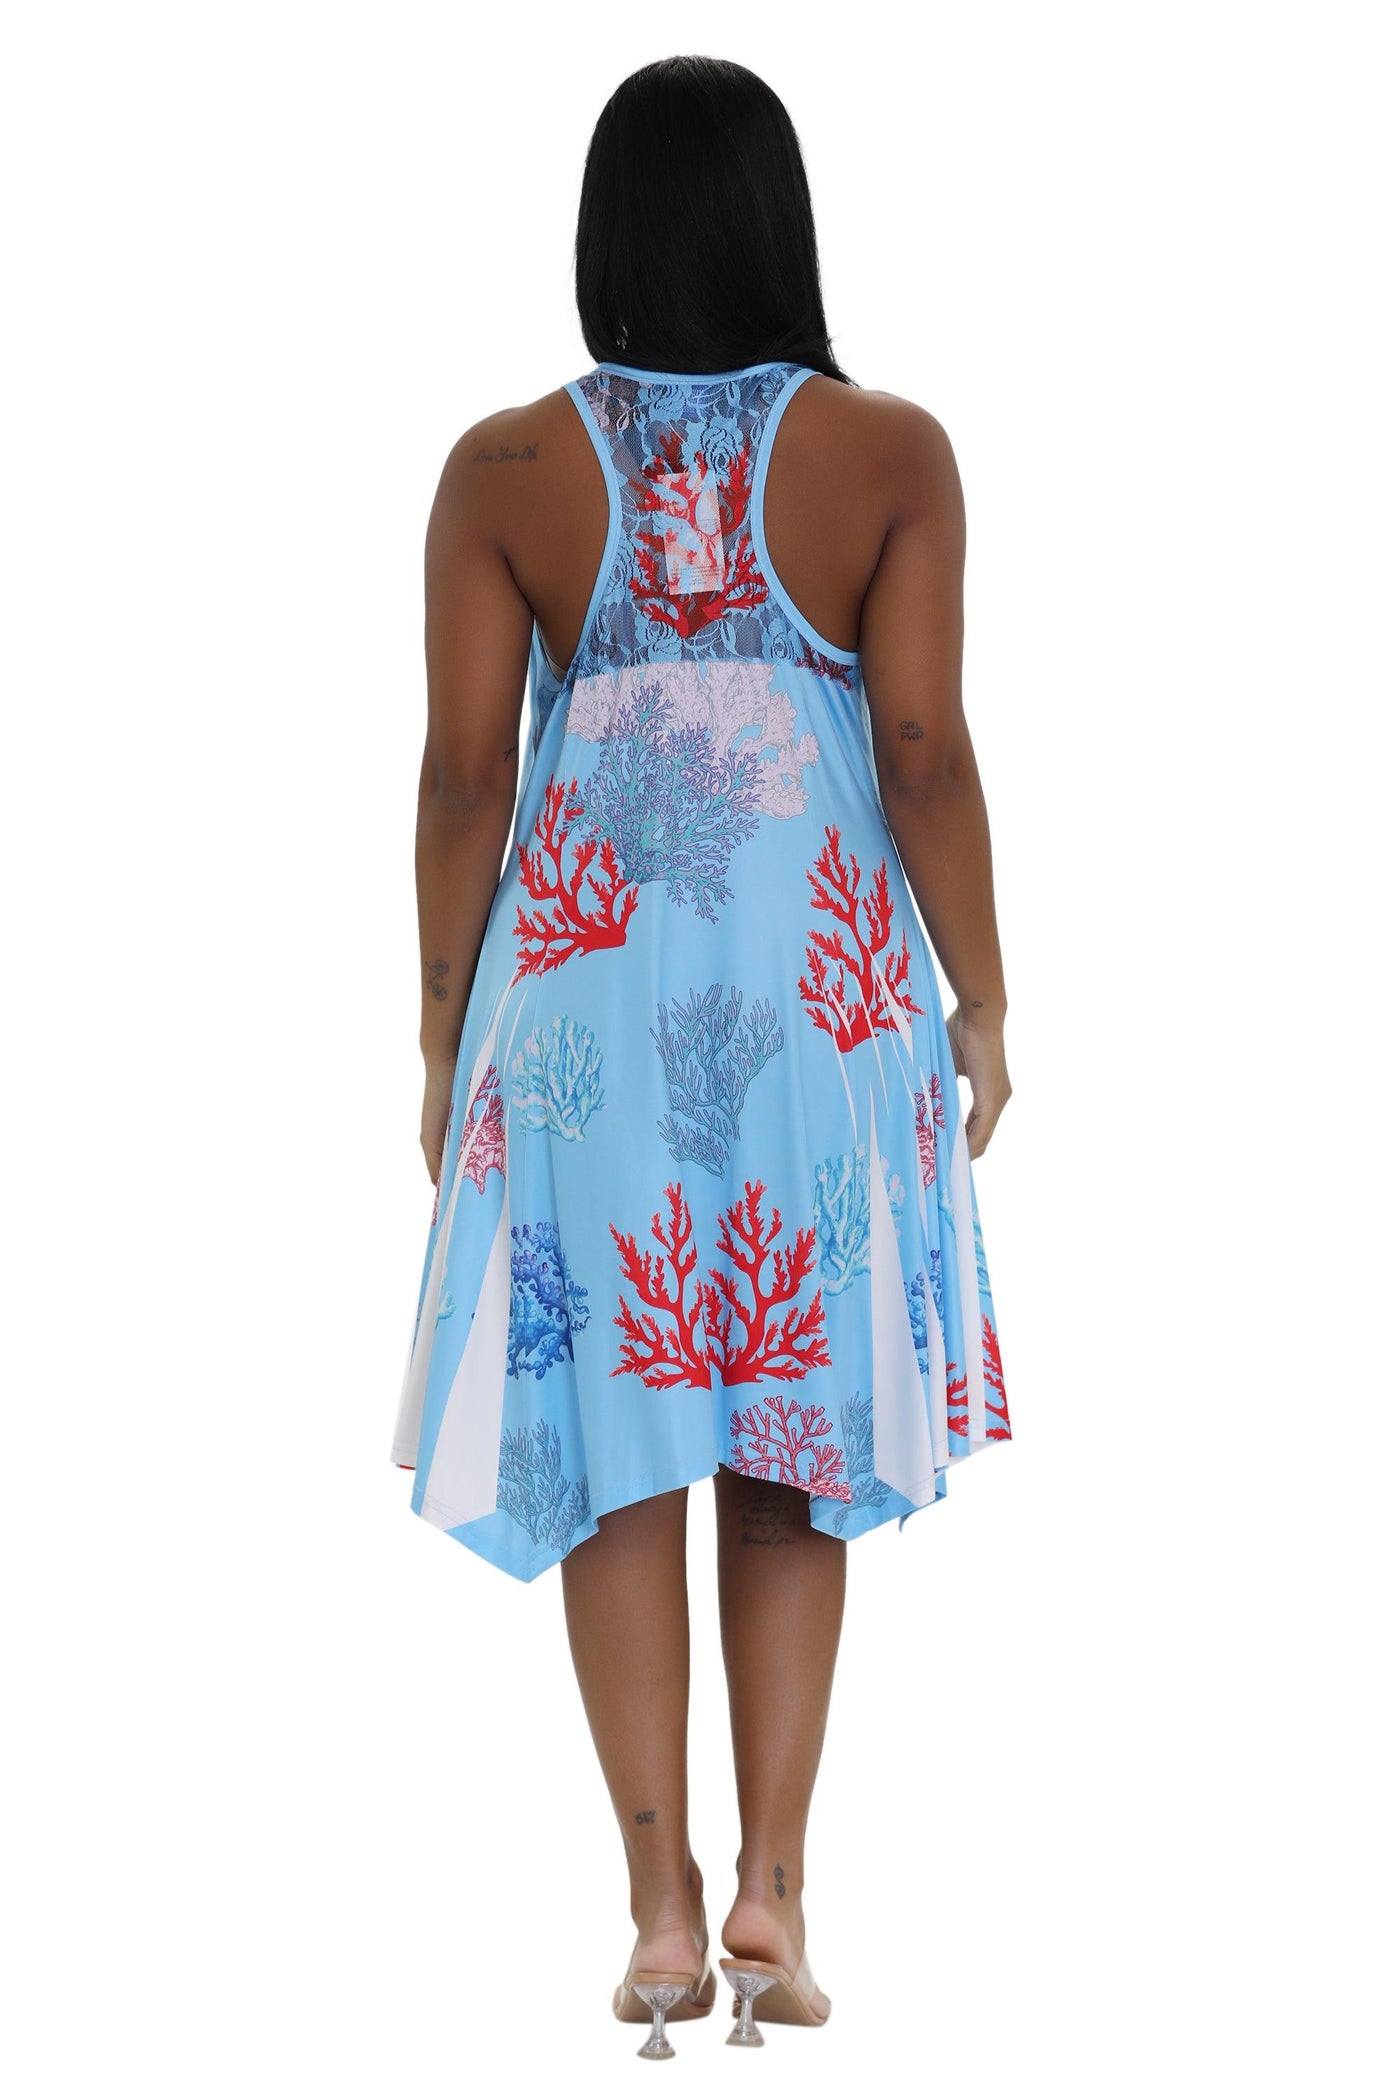 Coral Reef Print Beach Dress 21234  - Advance Apparels Inc